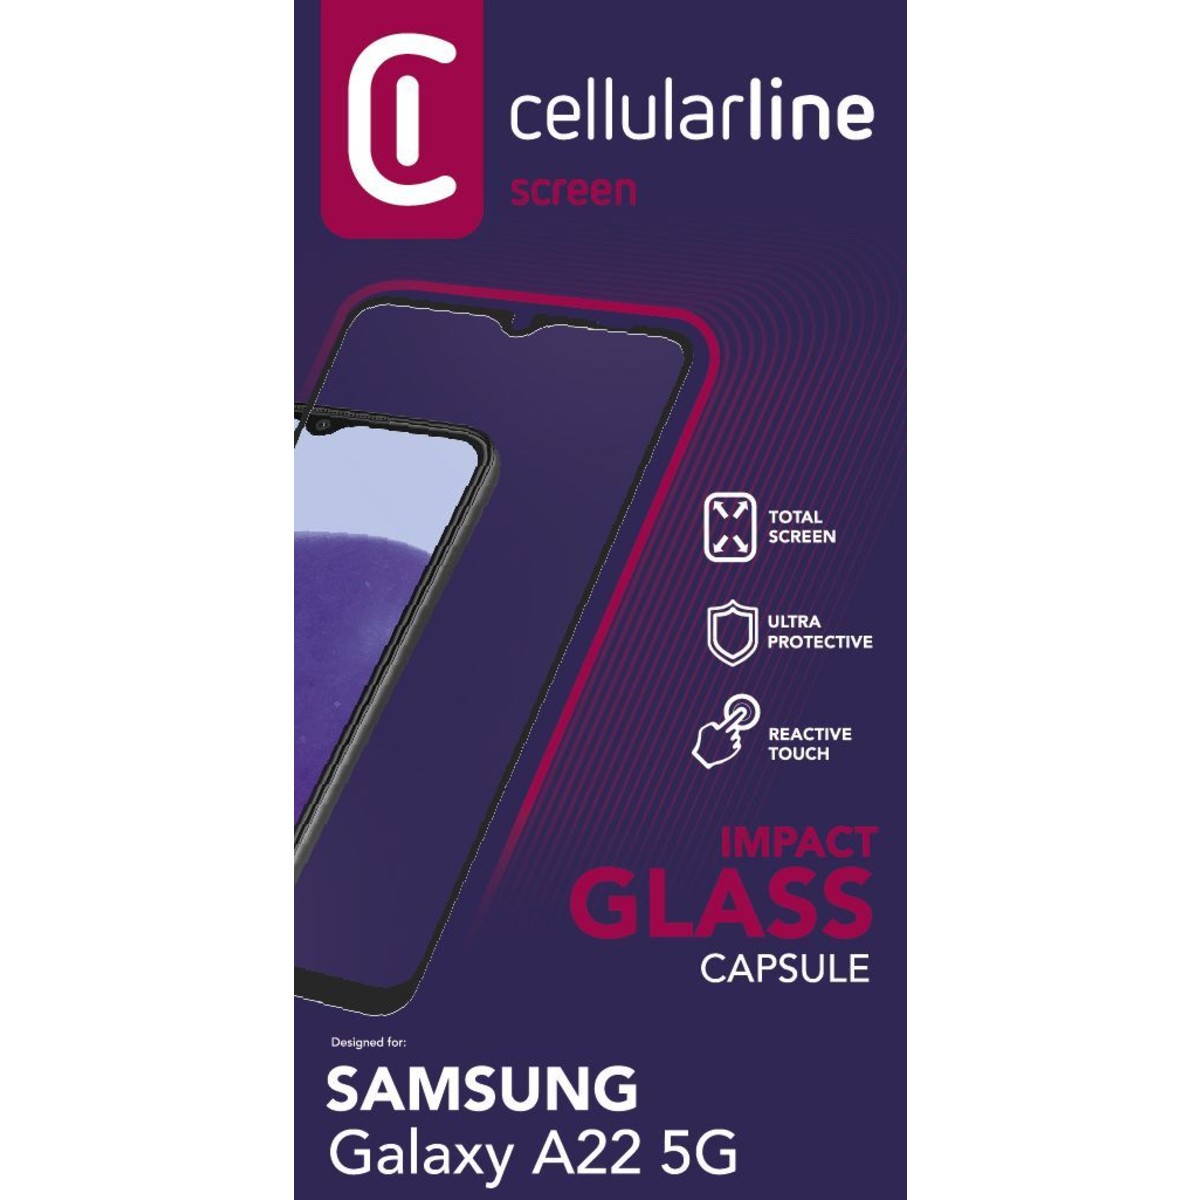 Schutzglas IMPACT GLASS CAPSULE für Samsung Galaxy A22 5G